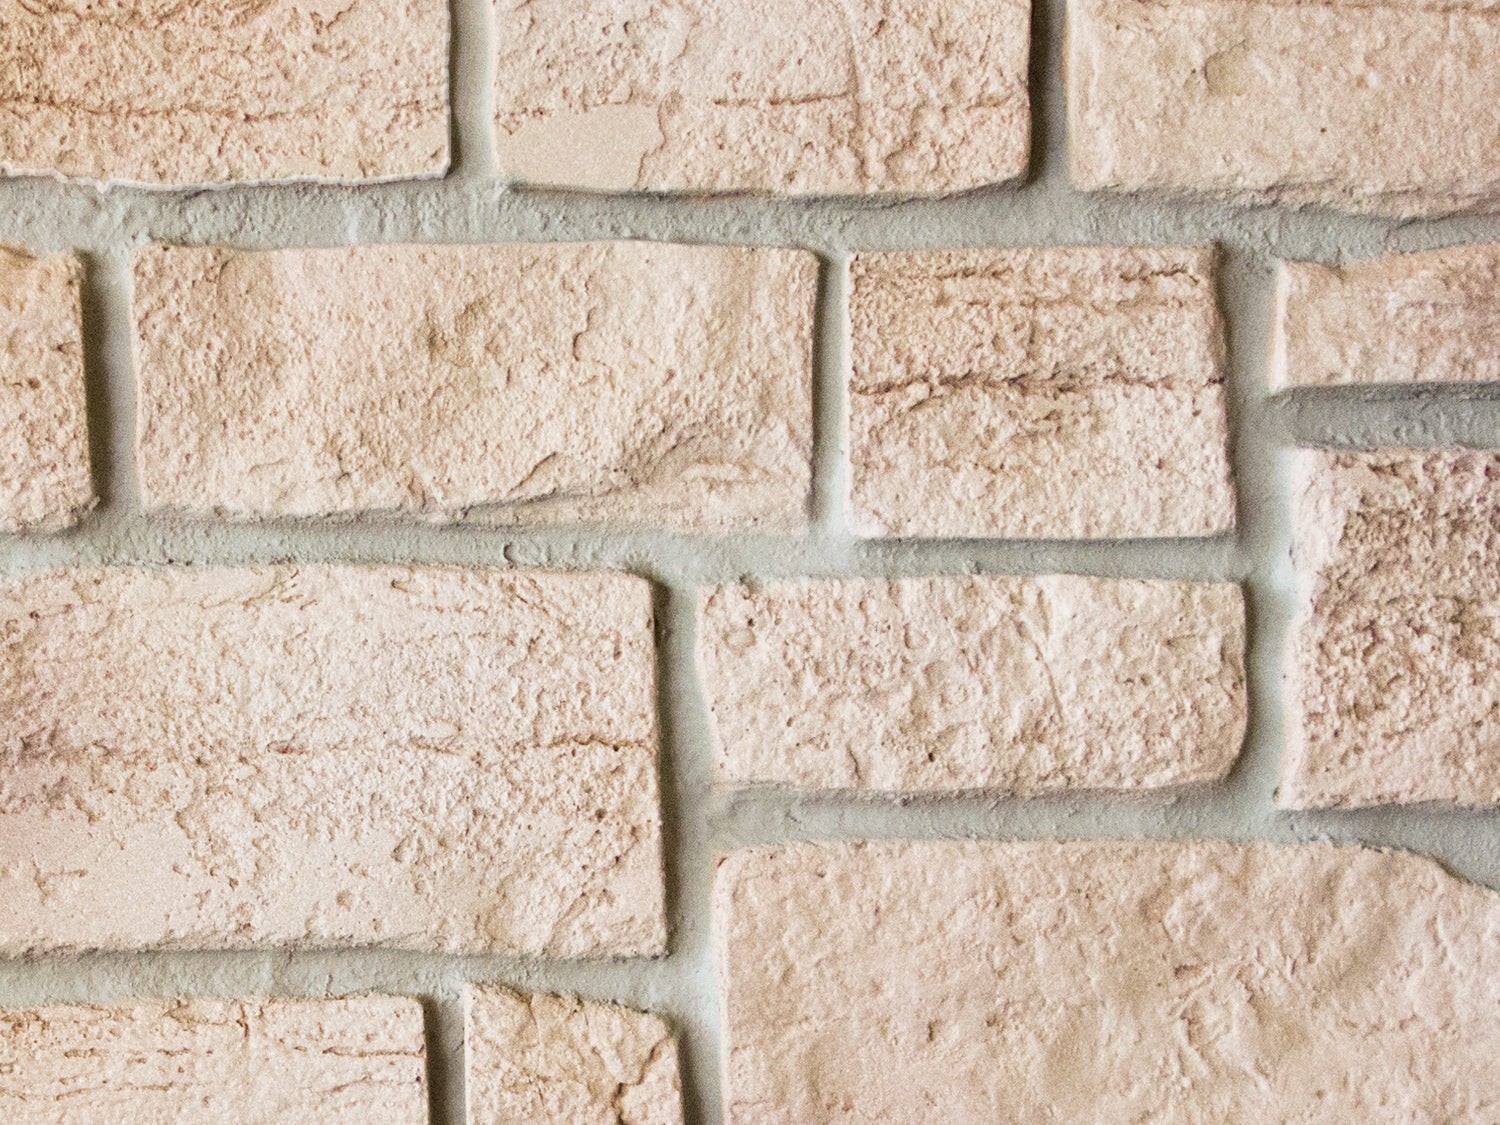 Detail] Chiseled stone bricks look really good under cobblestone